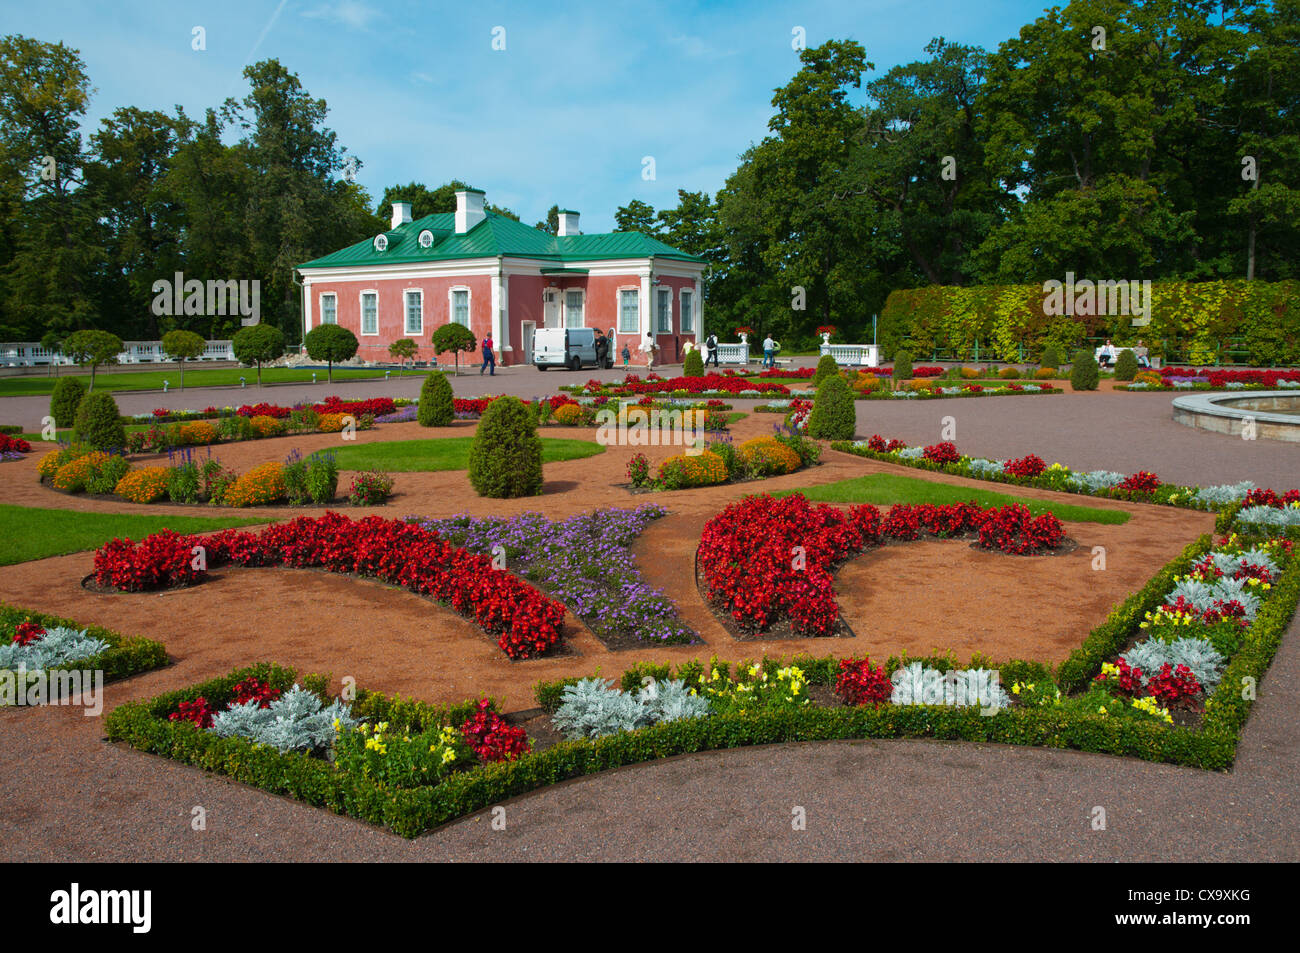 Flower garden of 18th century Baroque style Kadriorg Palace in Kadrioru park the Kadriorg park Tallinn Estonia Europe Stock Photo